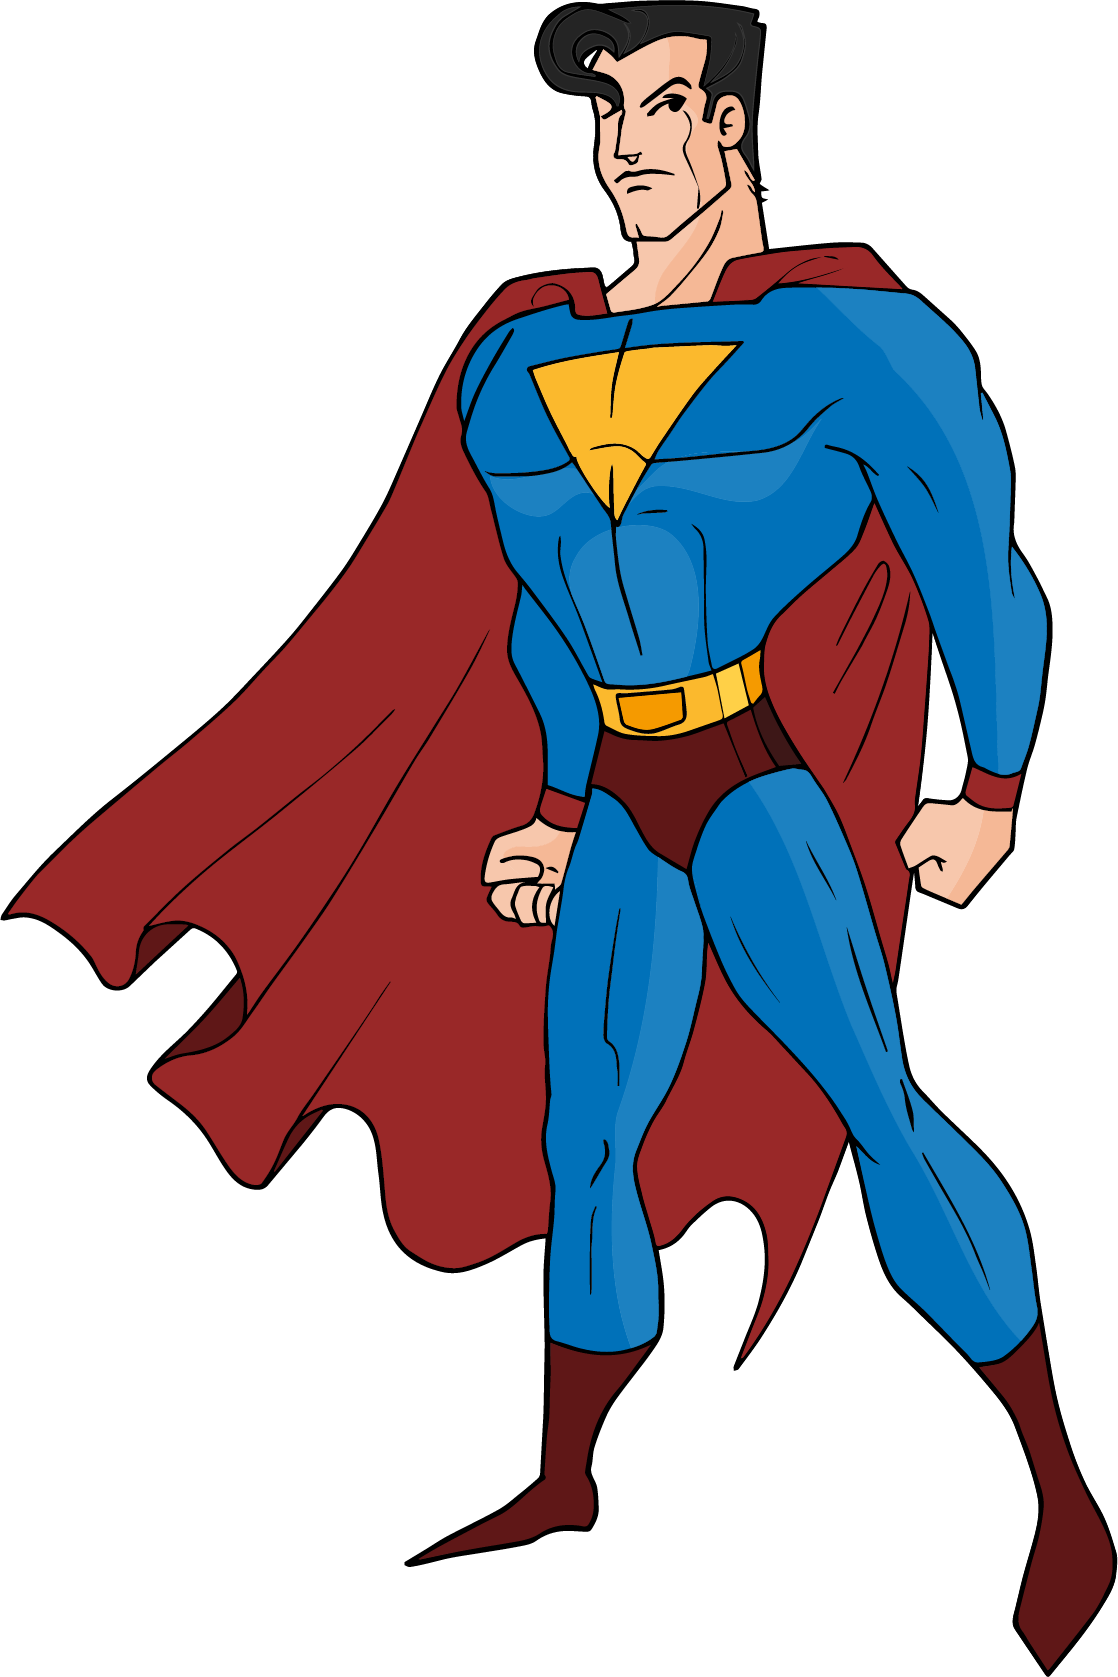 Superhero Stance Cartoon PNG image